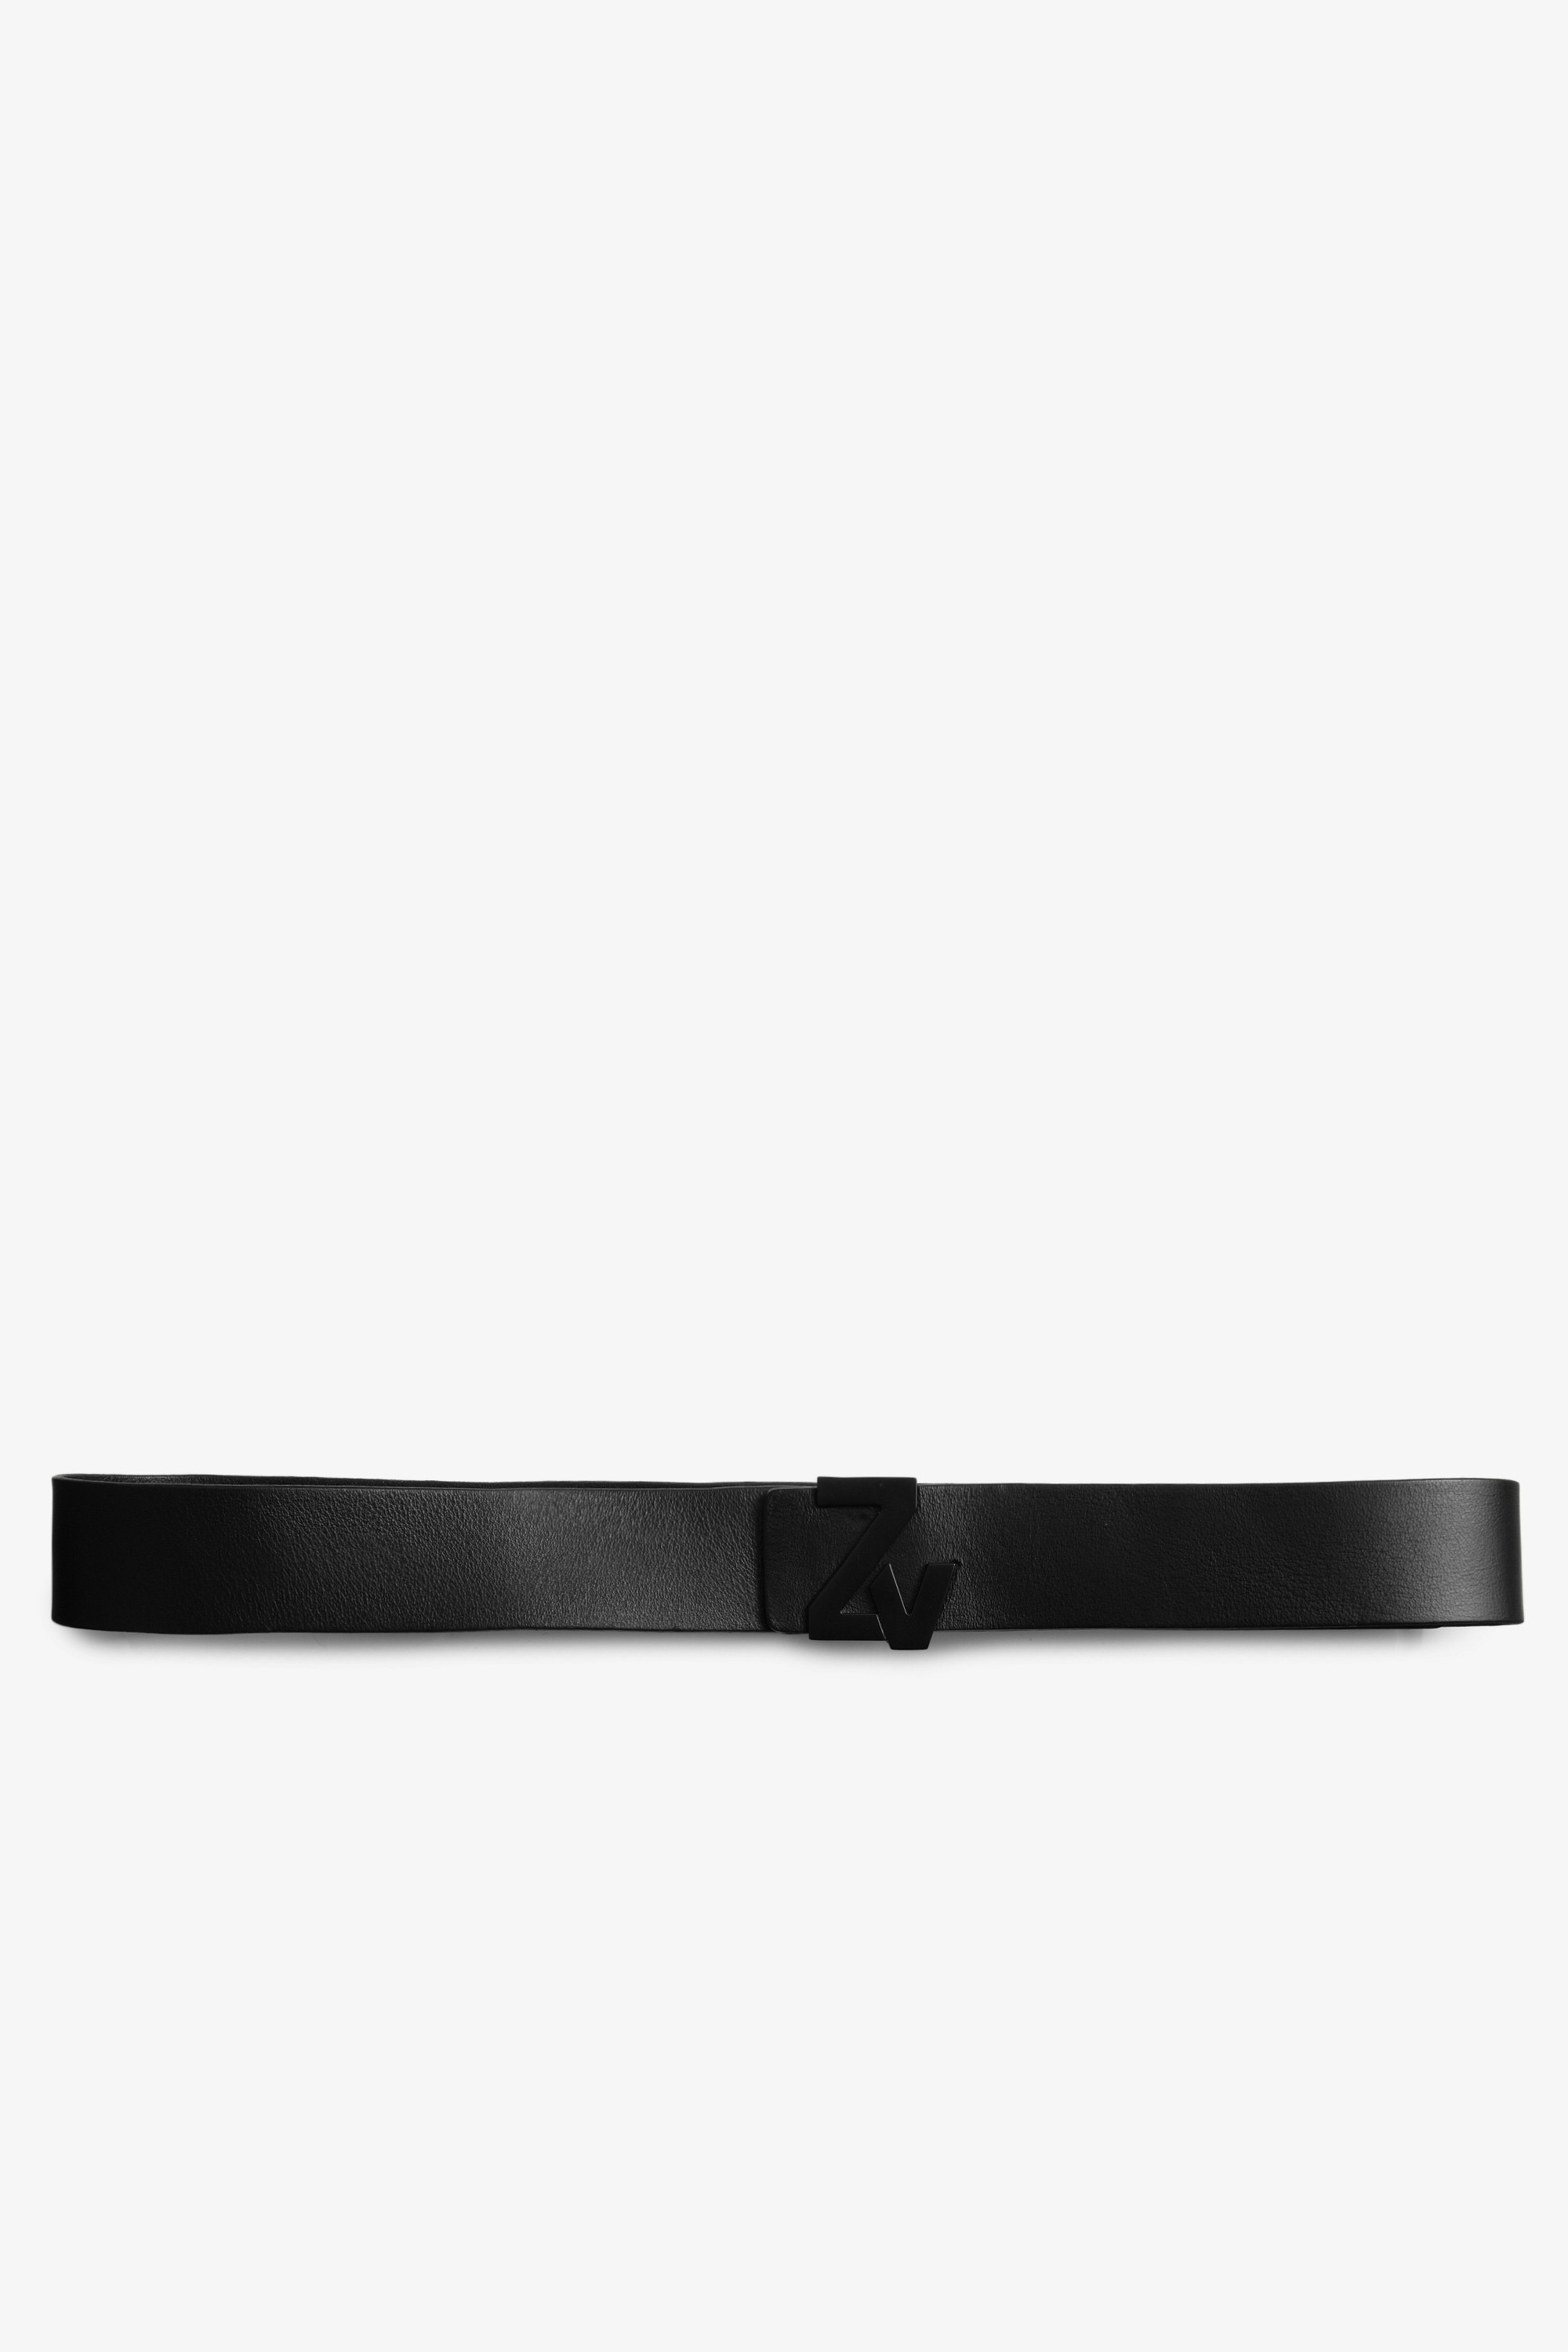 Gürtel ZV Initiale La Belt Leder - Herrengürtel aus schwarzem Leder mit ZV-Schnalle